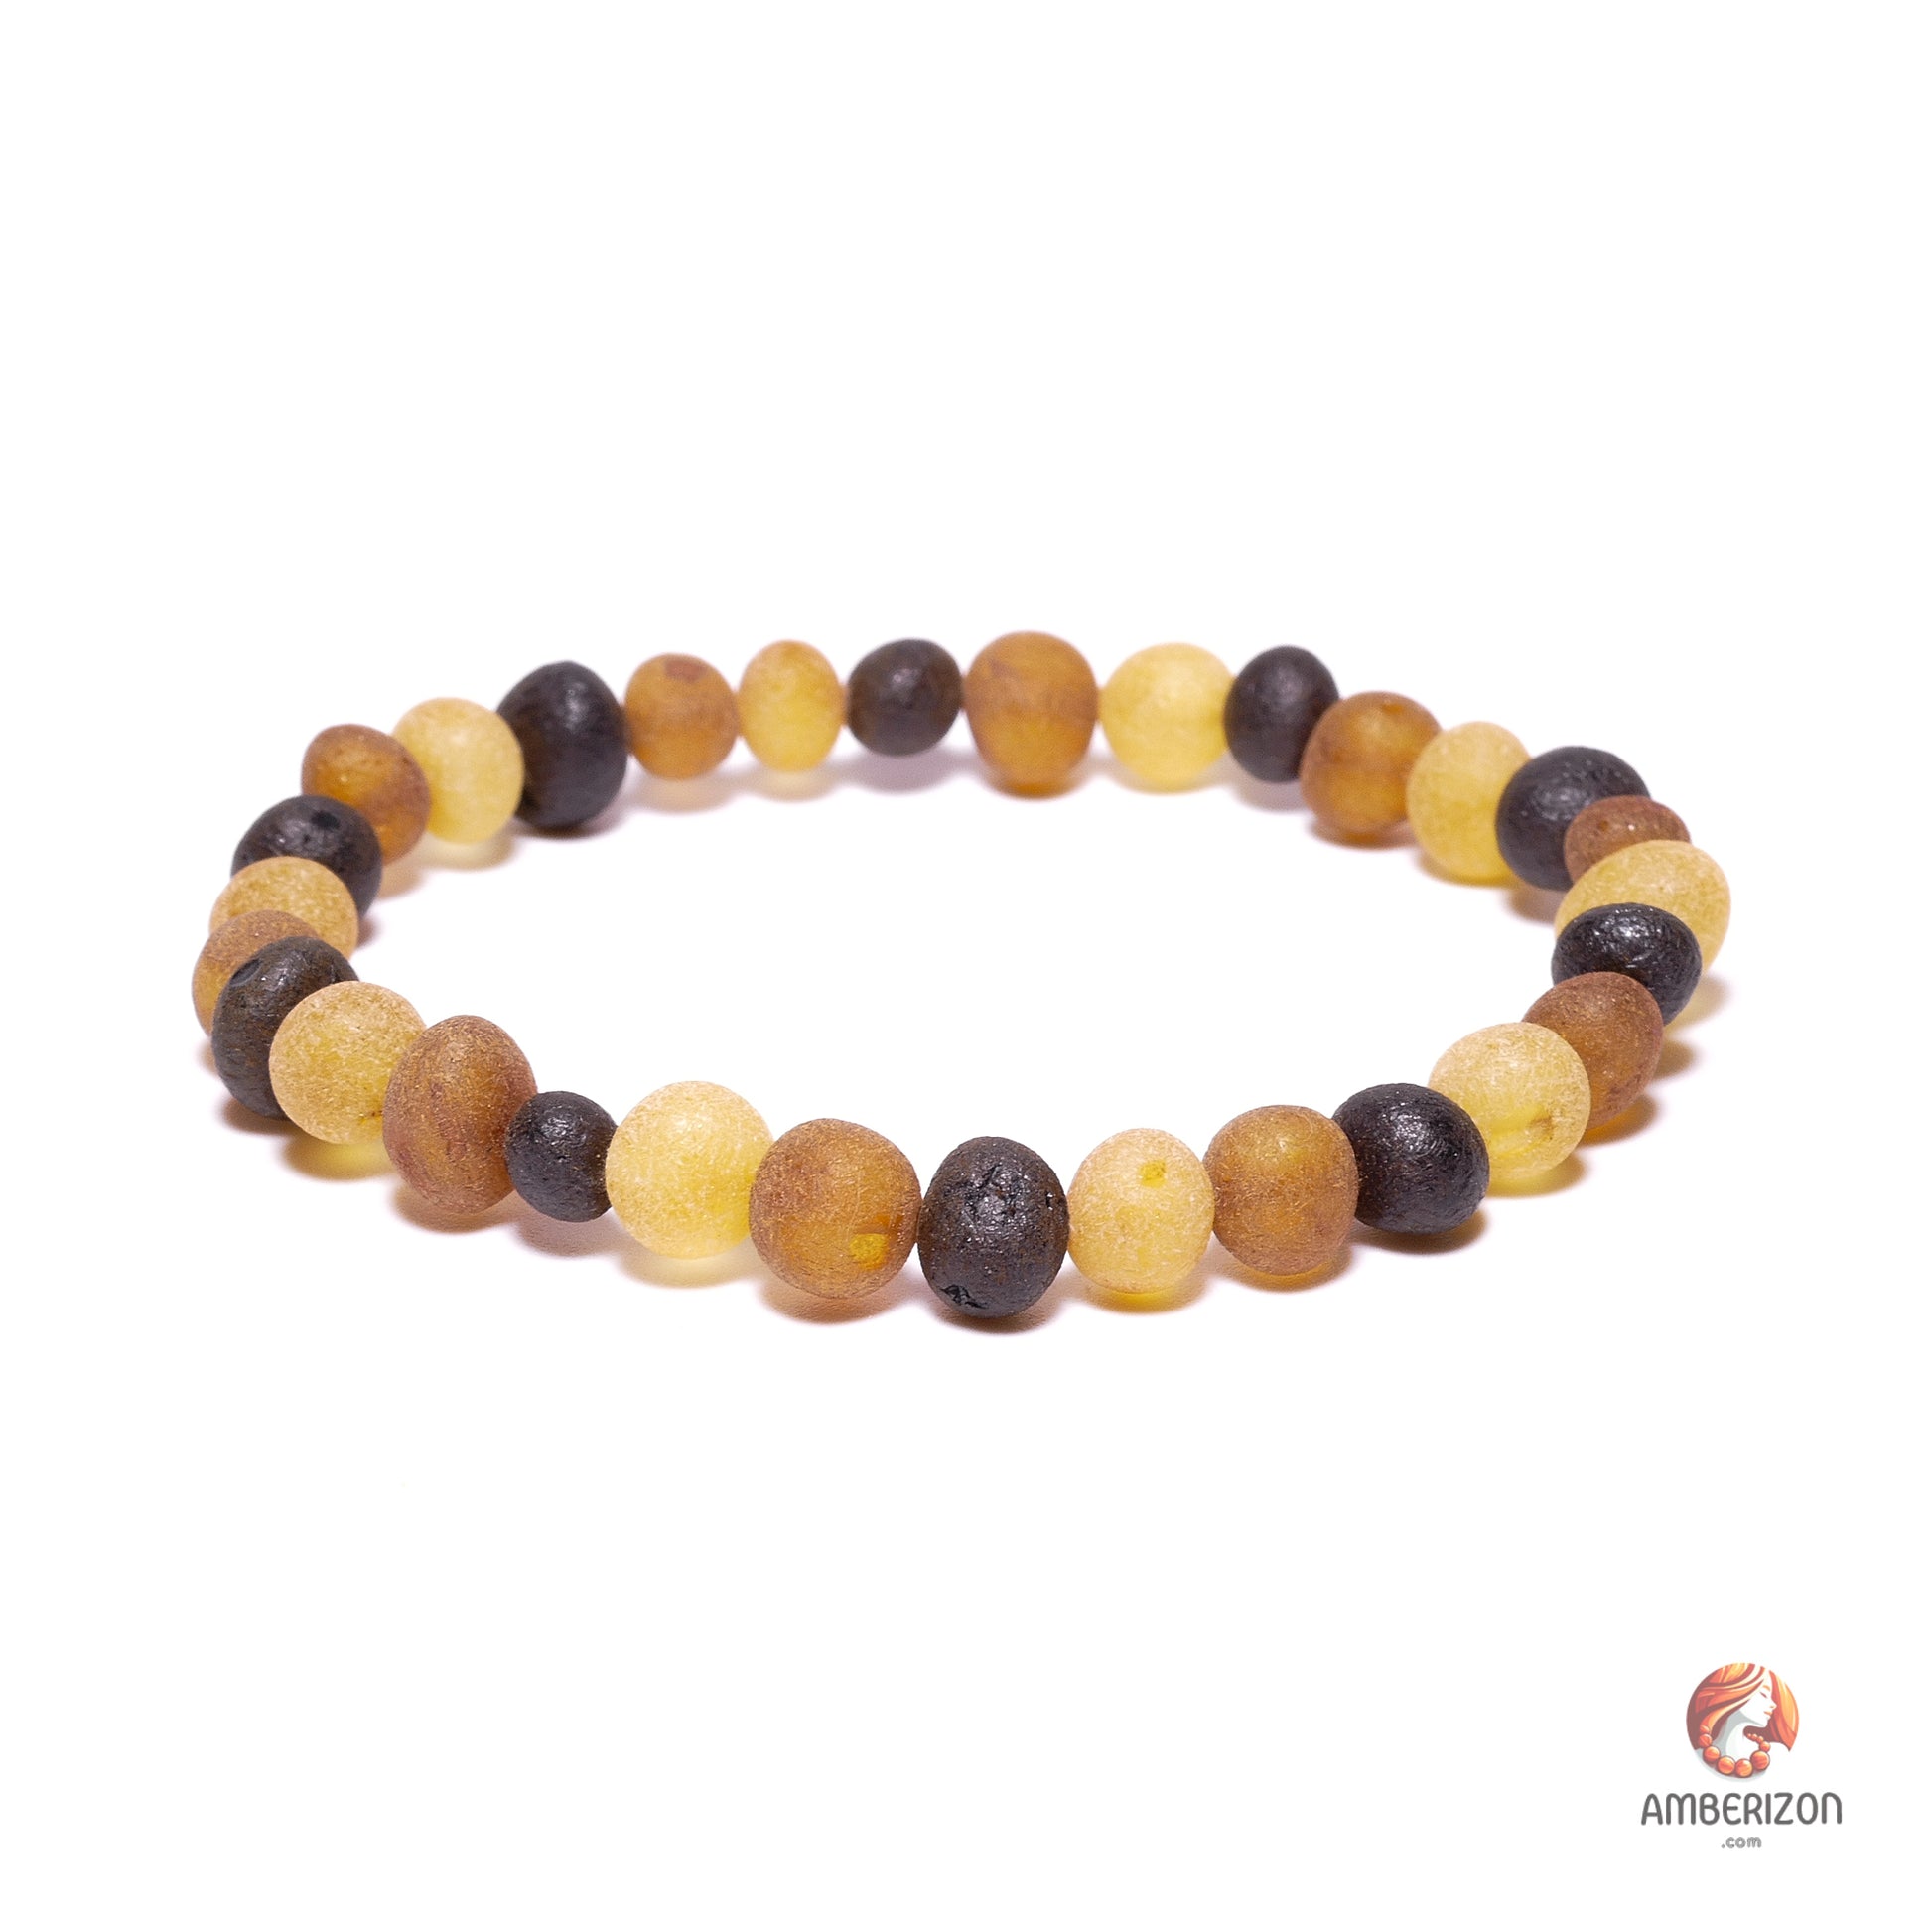 Unpolished raw amber bracelet - Premium frosted finish baroque beads - Stretchy